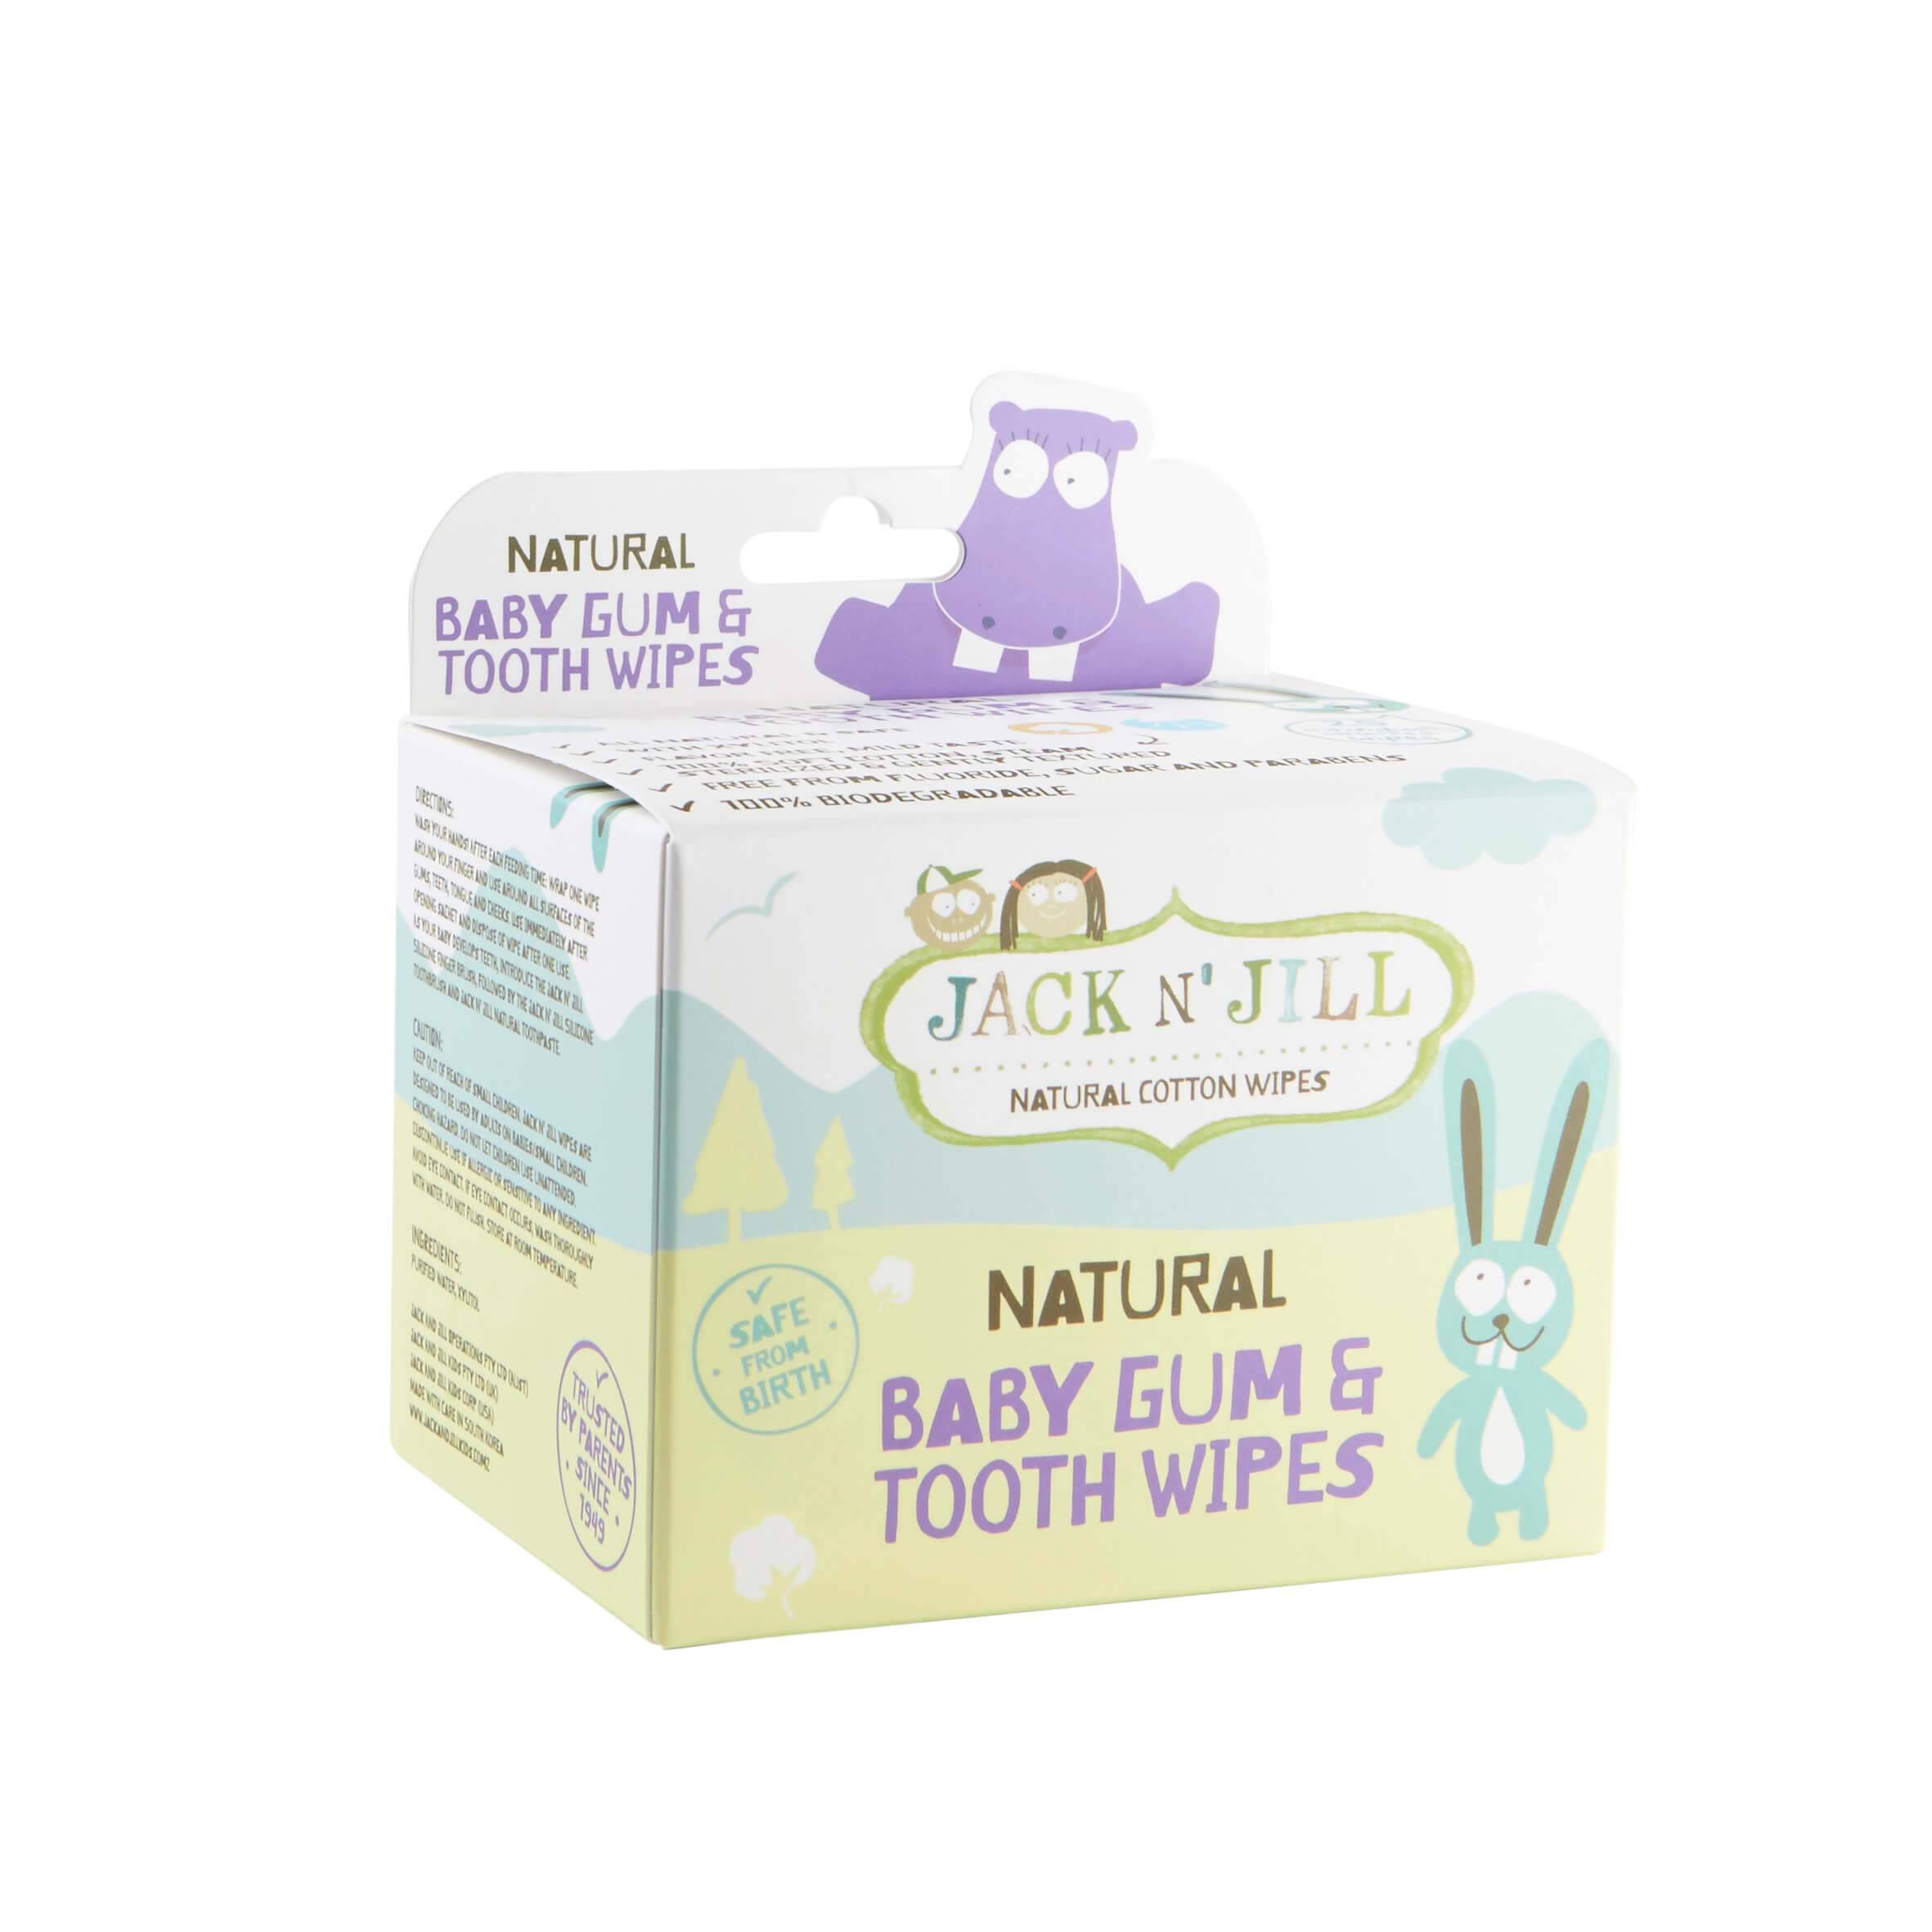 Jack n' Jill Natural Baby Gum & Tooth Wipes - 25pk